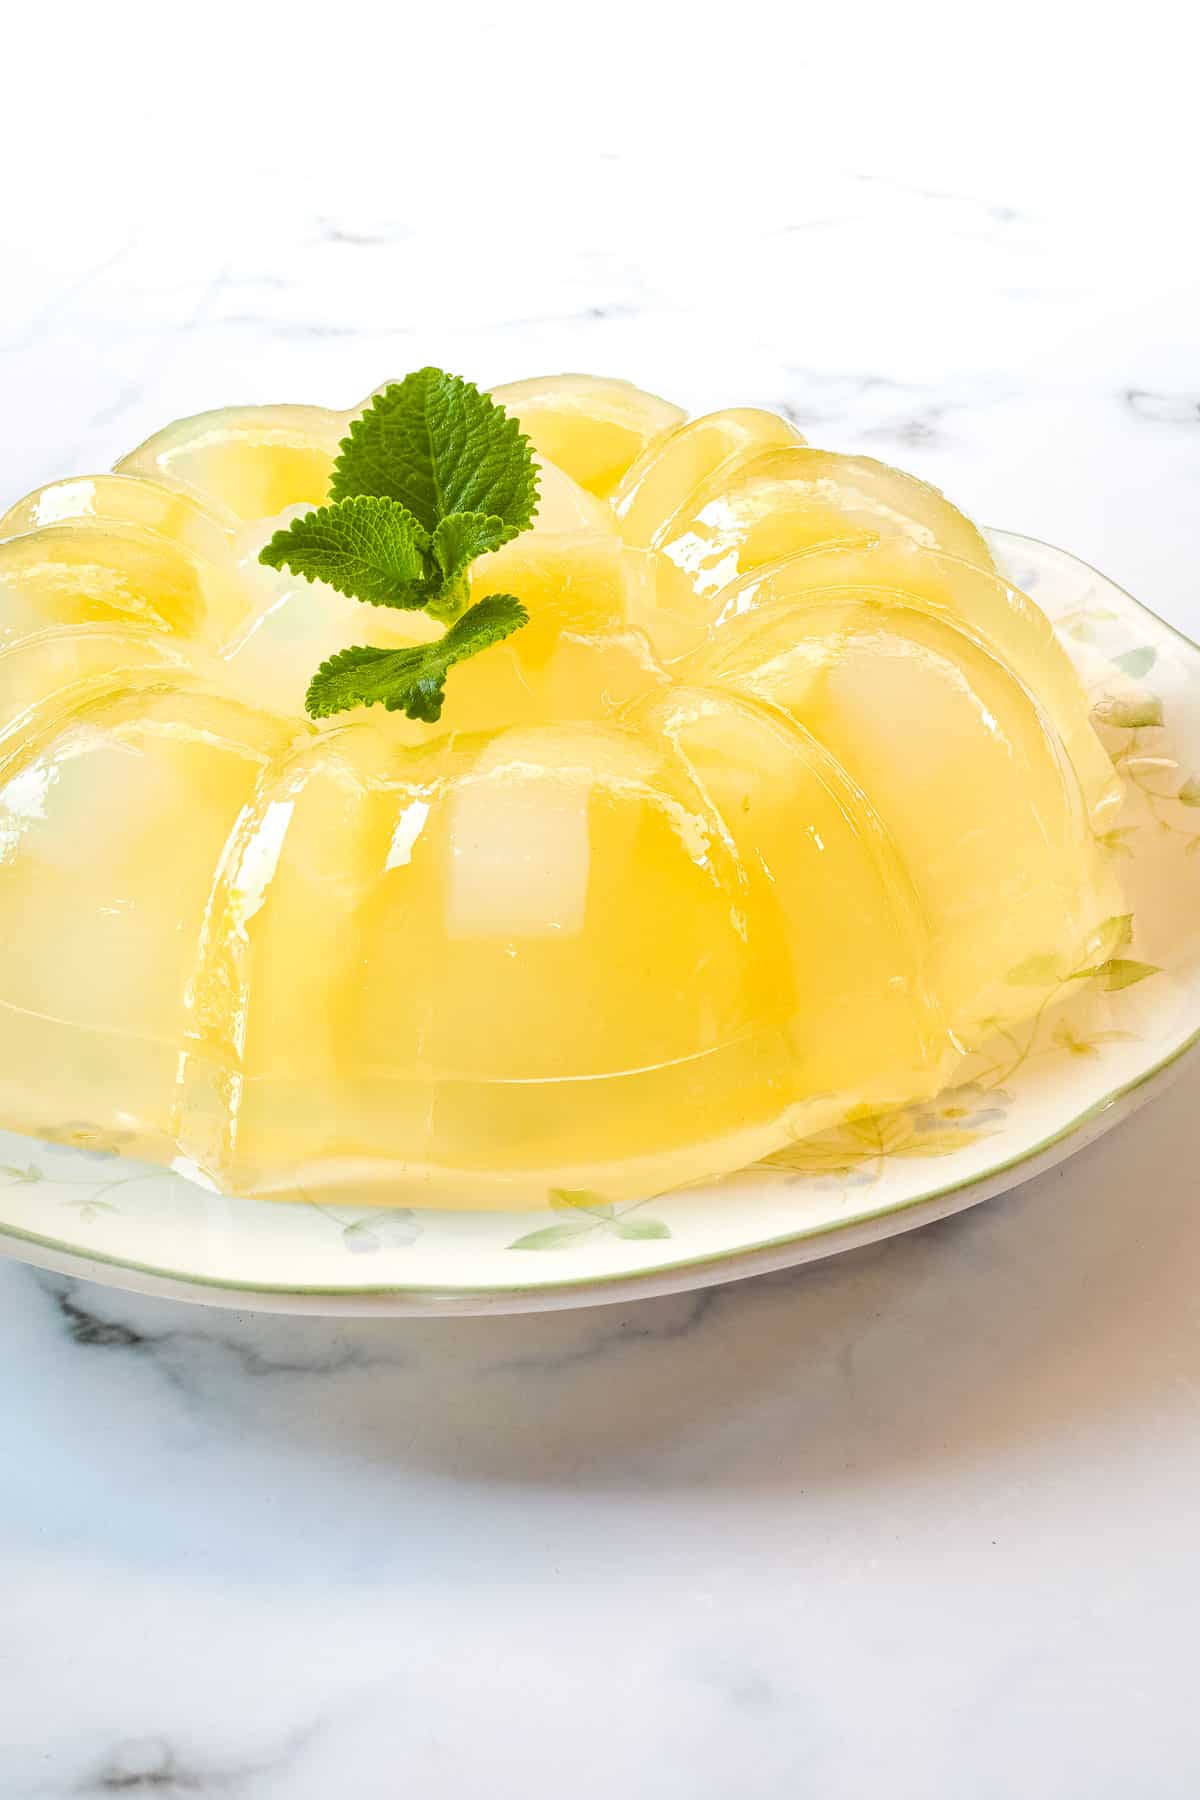 A bundt shaped nata de coco jelly in a plate.